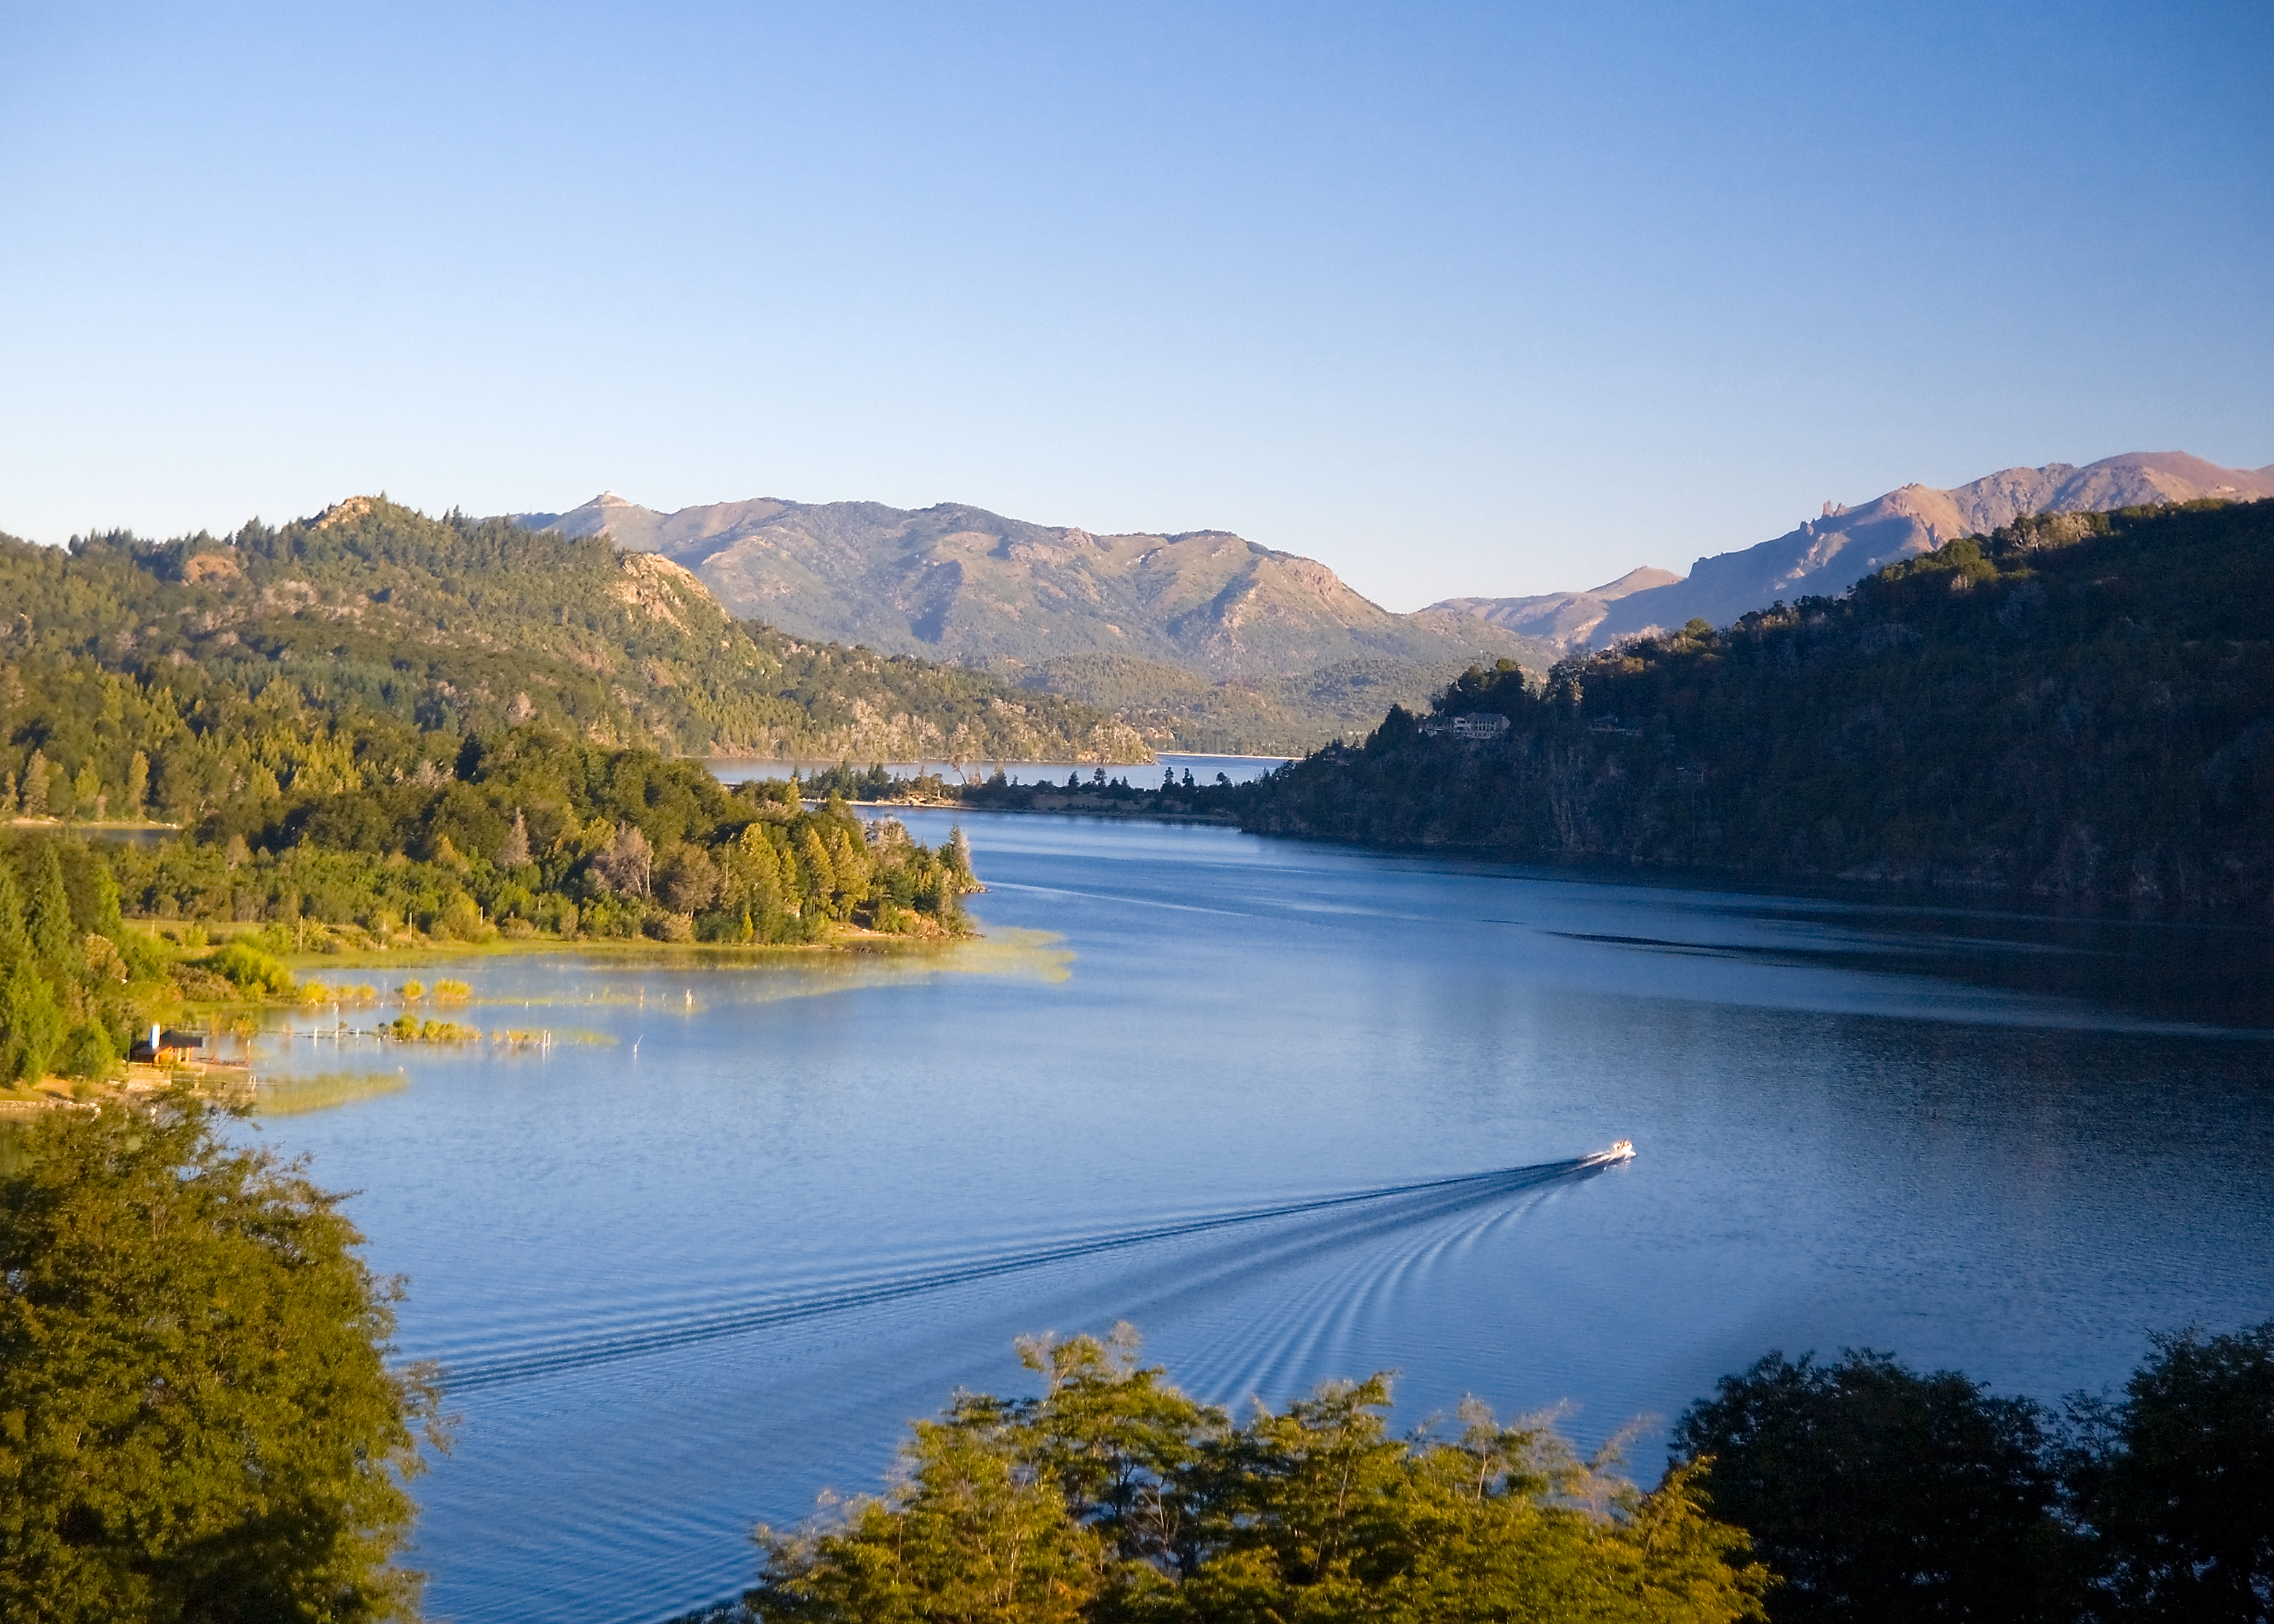 Lago Nahuel Huapi - Ruta de los Siete Lagos - Argentina - Wikimedia Commons - David